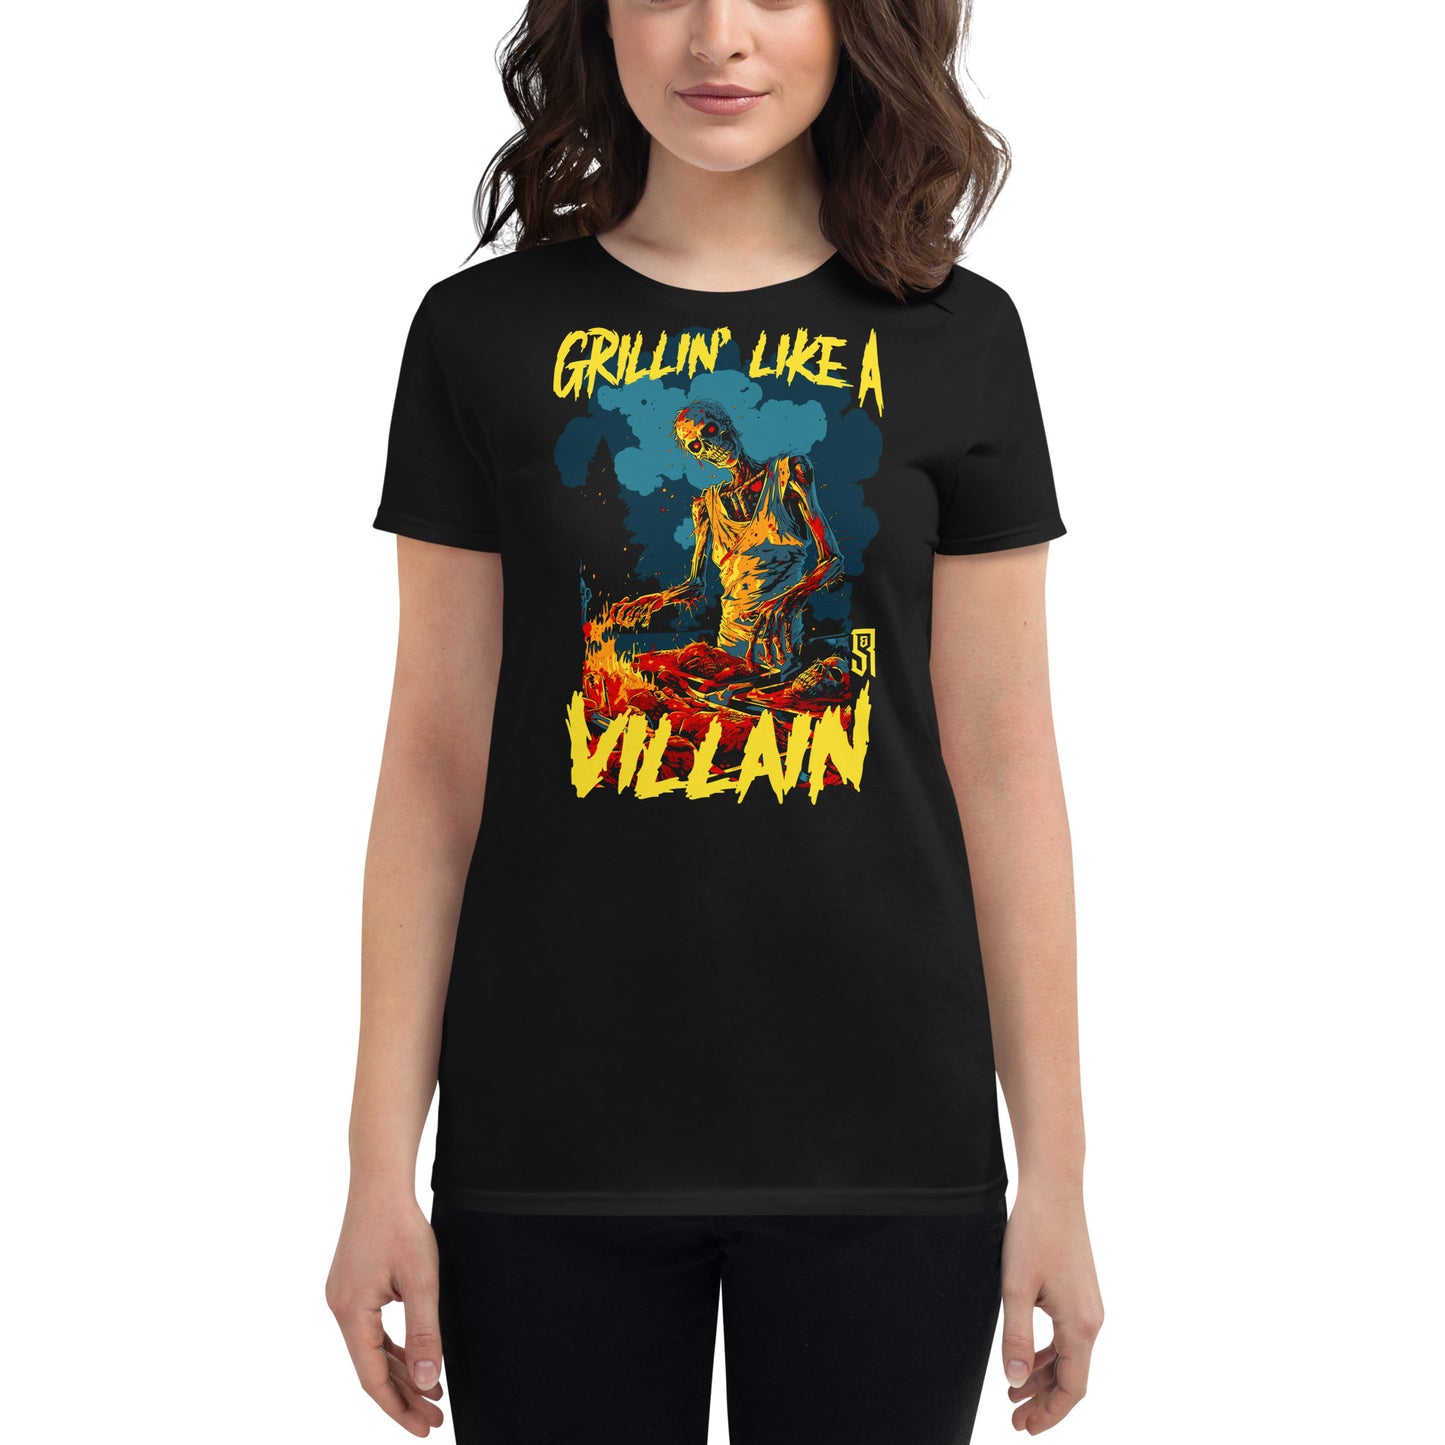 Grillin' like a Villain Zombie Women's Fashion Fit T-shirt